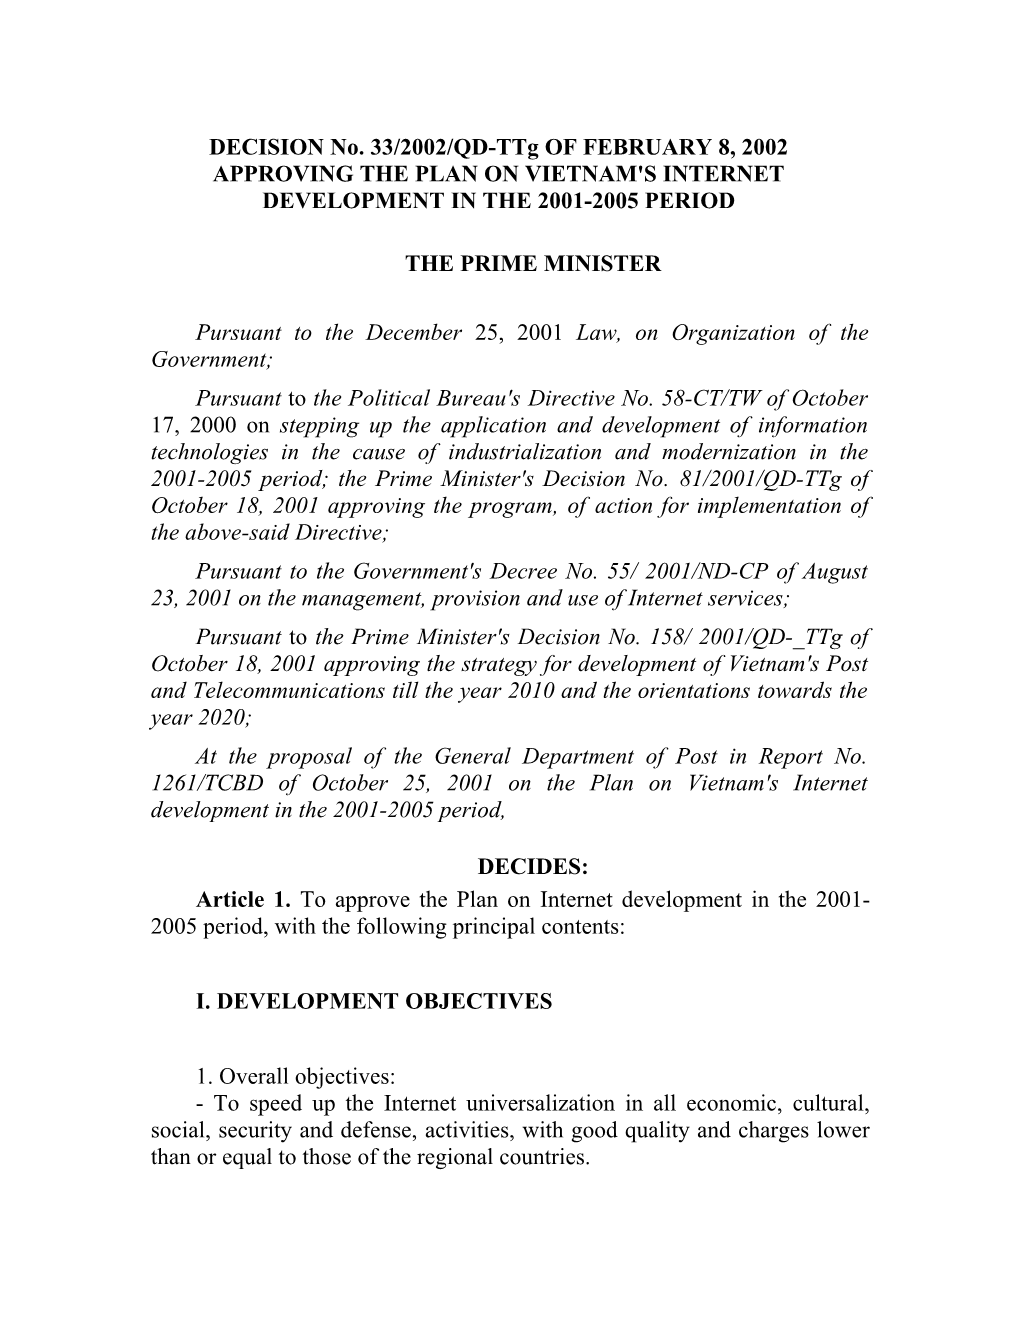 DECISION No. 33/2002/QD-Ttg of FEBRUARY 8, 2002 APPROVING the PLAN on VIETNAM's INTERNET